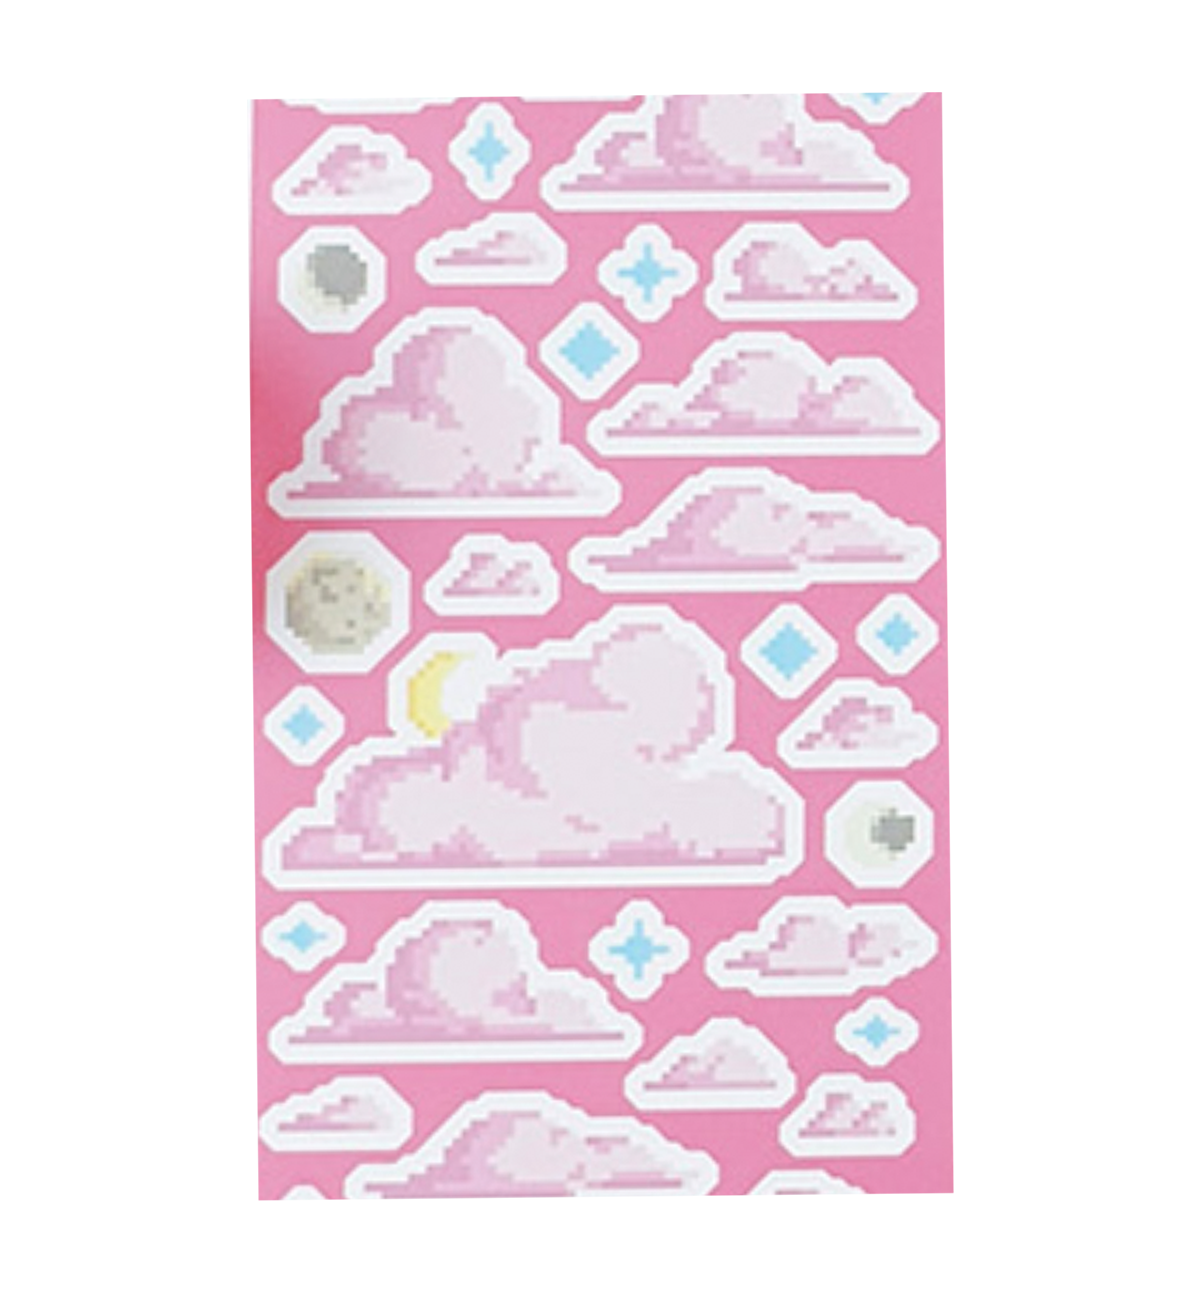 Pixel Cloud Series Seal Sticker